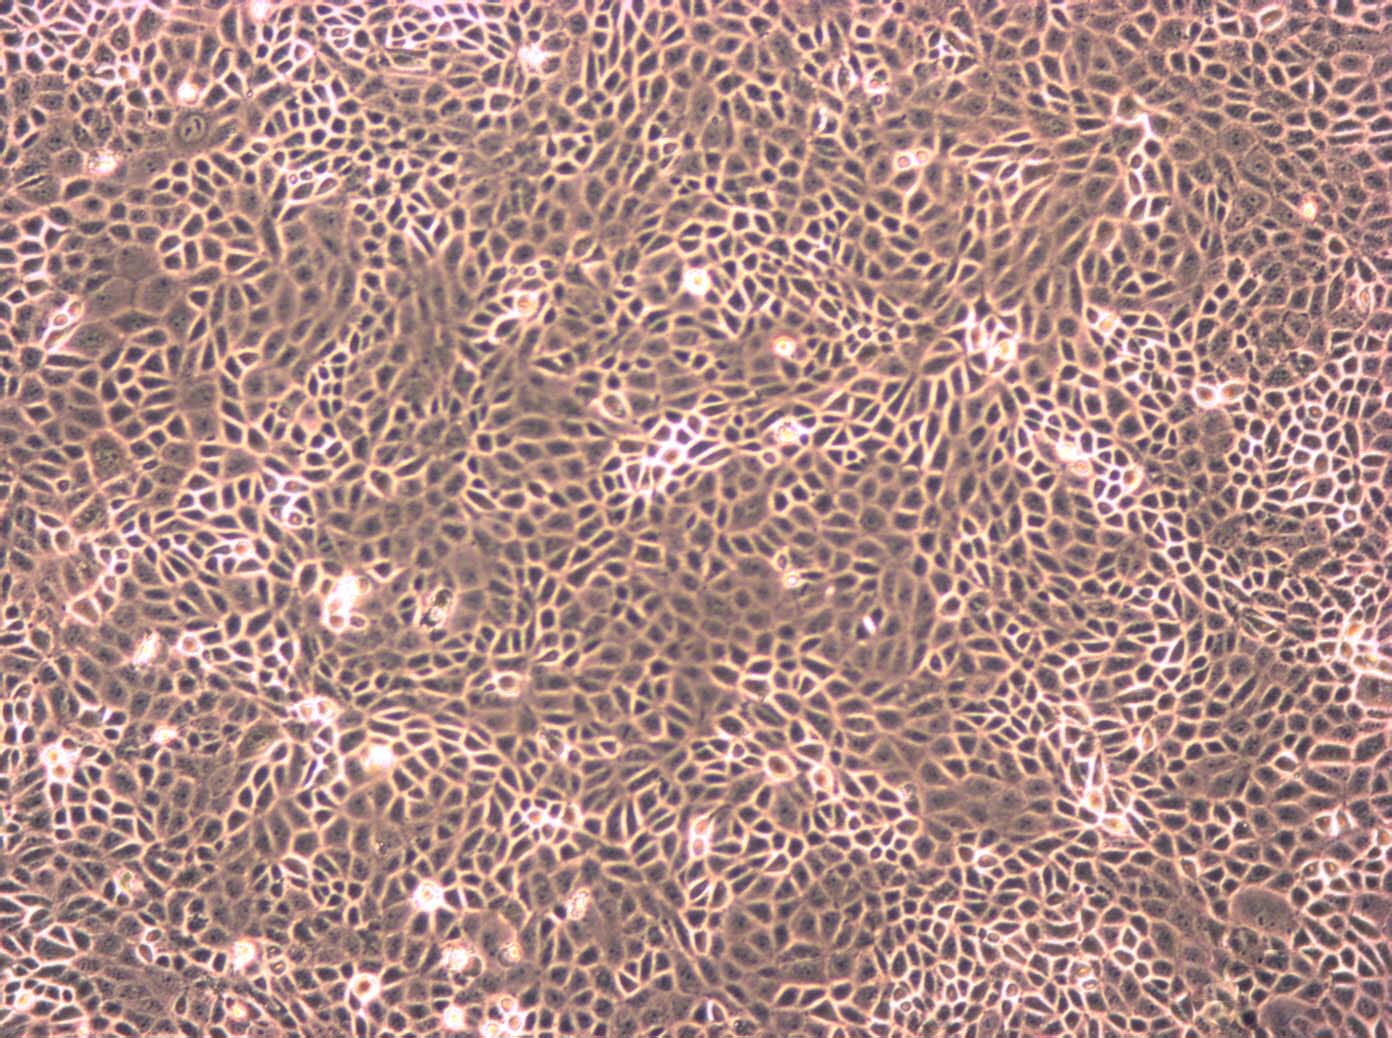 Calu-3 Cells(赠送Str鉴定报告)|人肺腺癌细胞